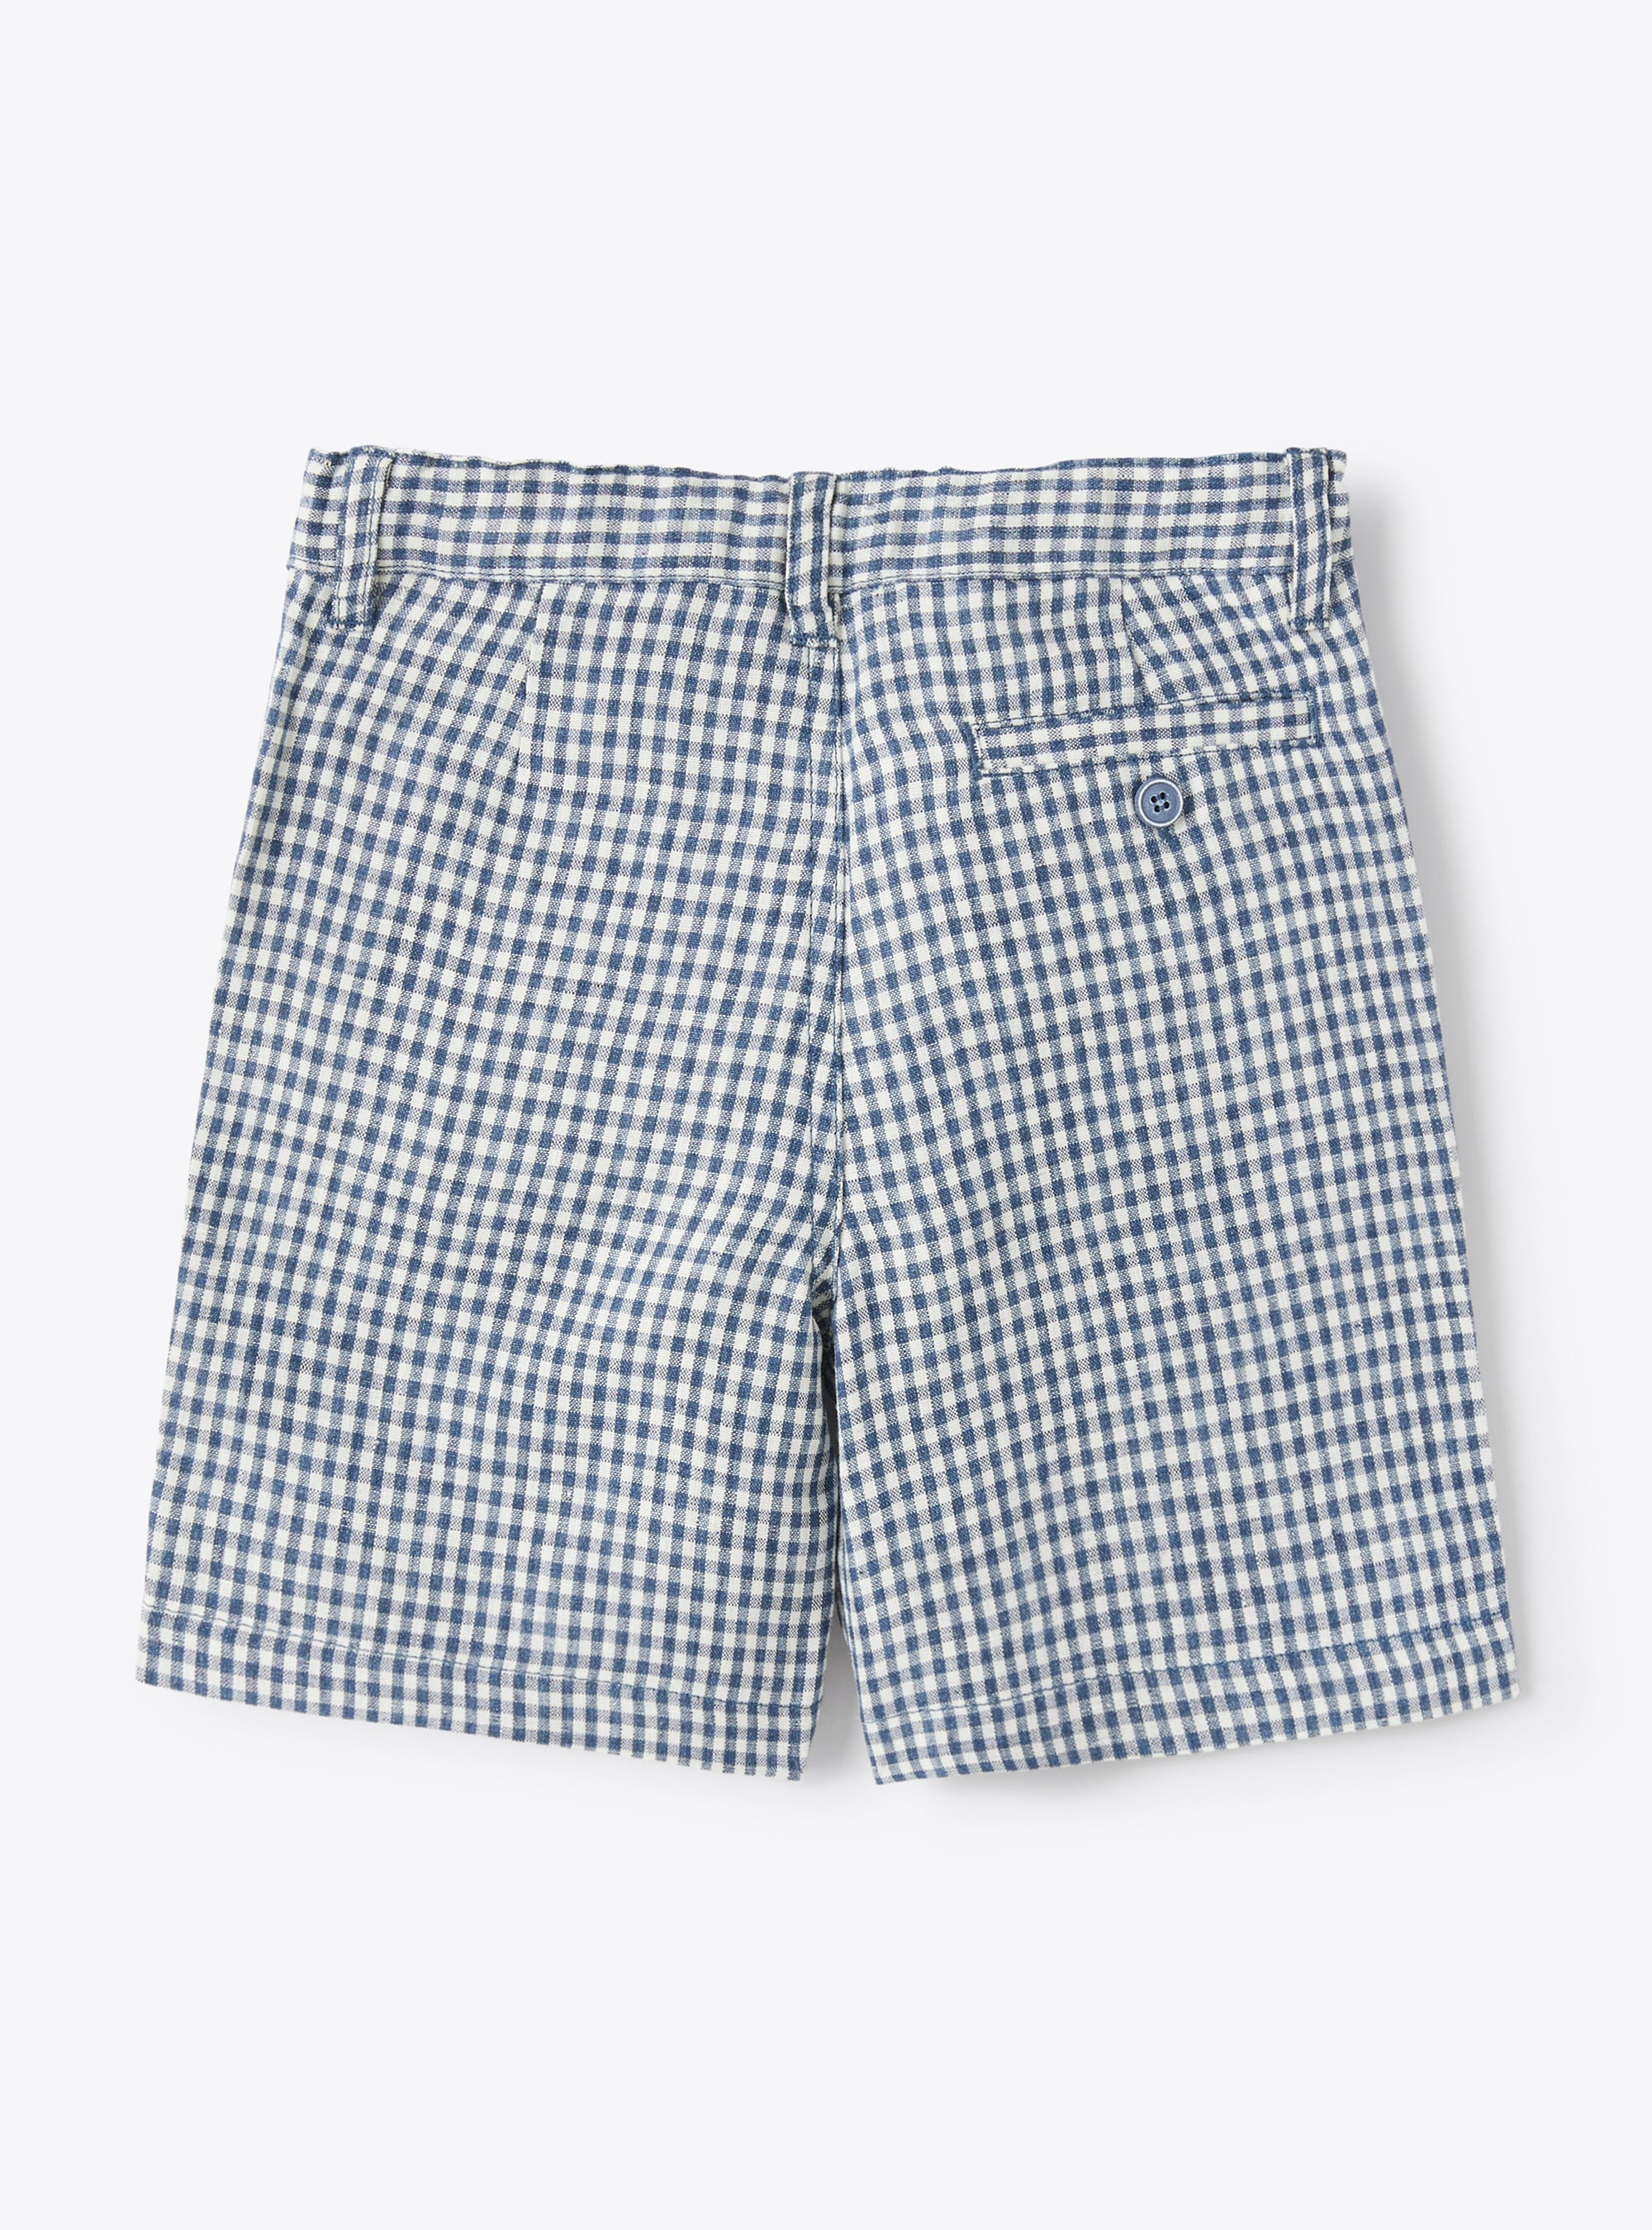 Bermuda shorts in gingham-check linen - Blue | Il Gufo